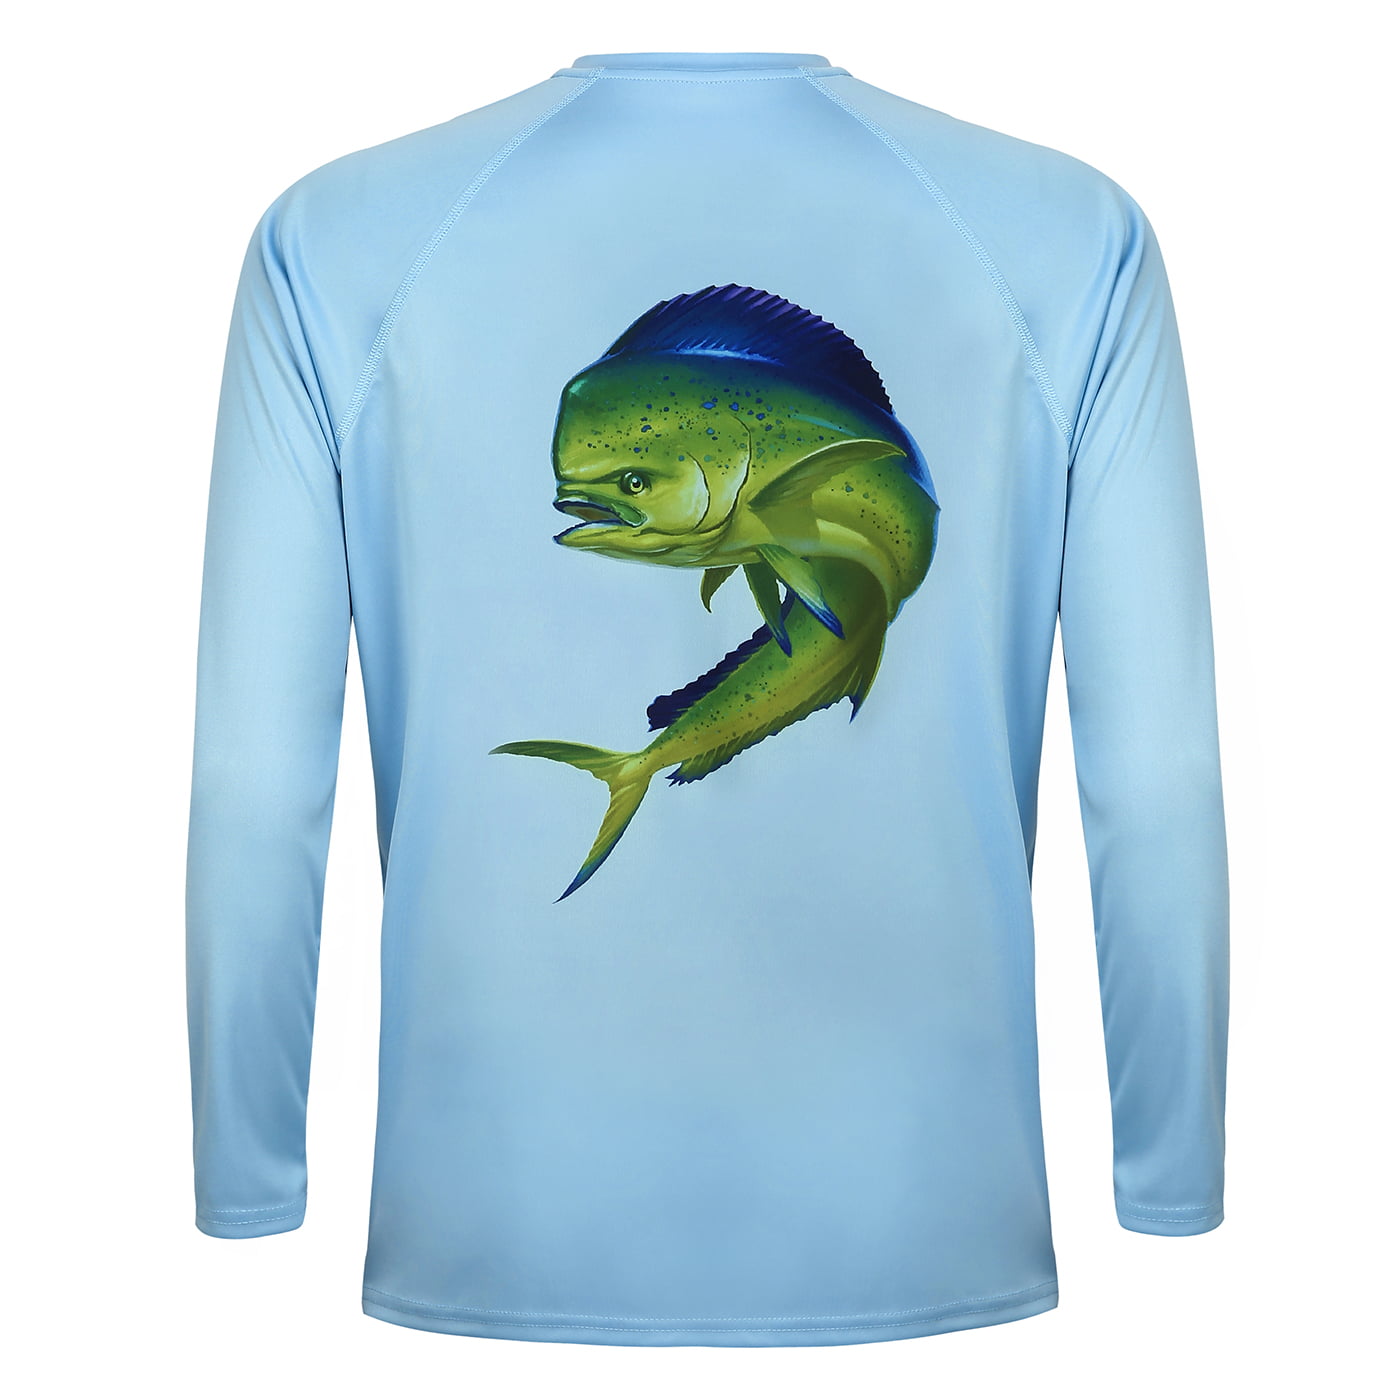 Mens Athletic Performance Shirt Long Sleeve Seafoam Green Sailfish XL 